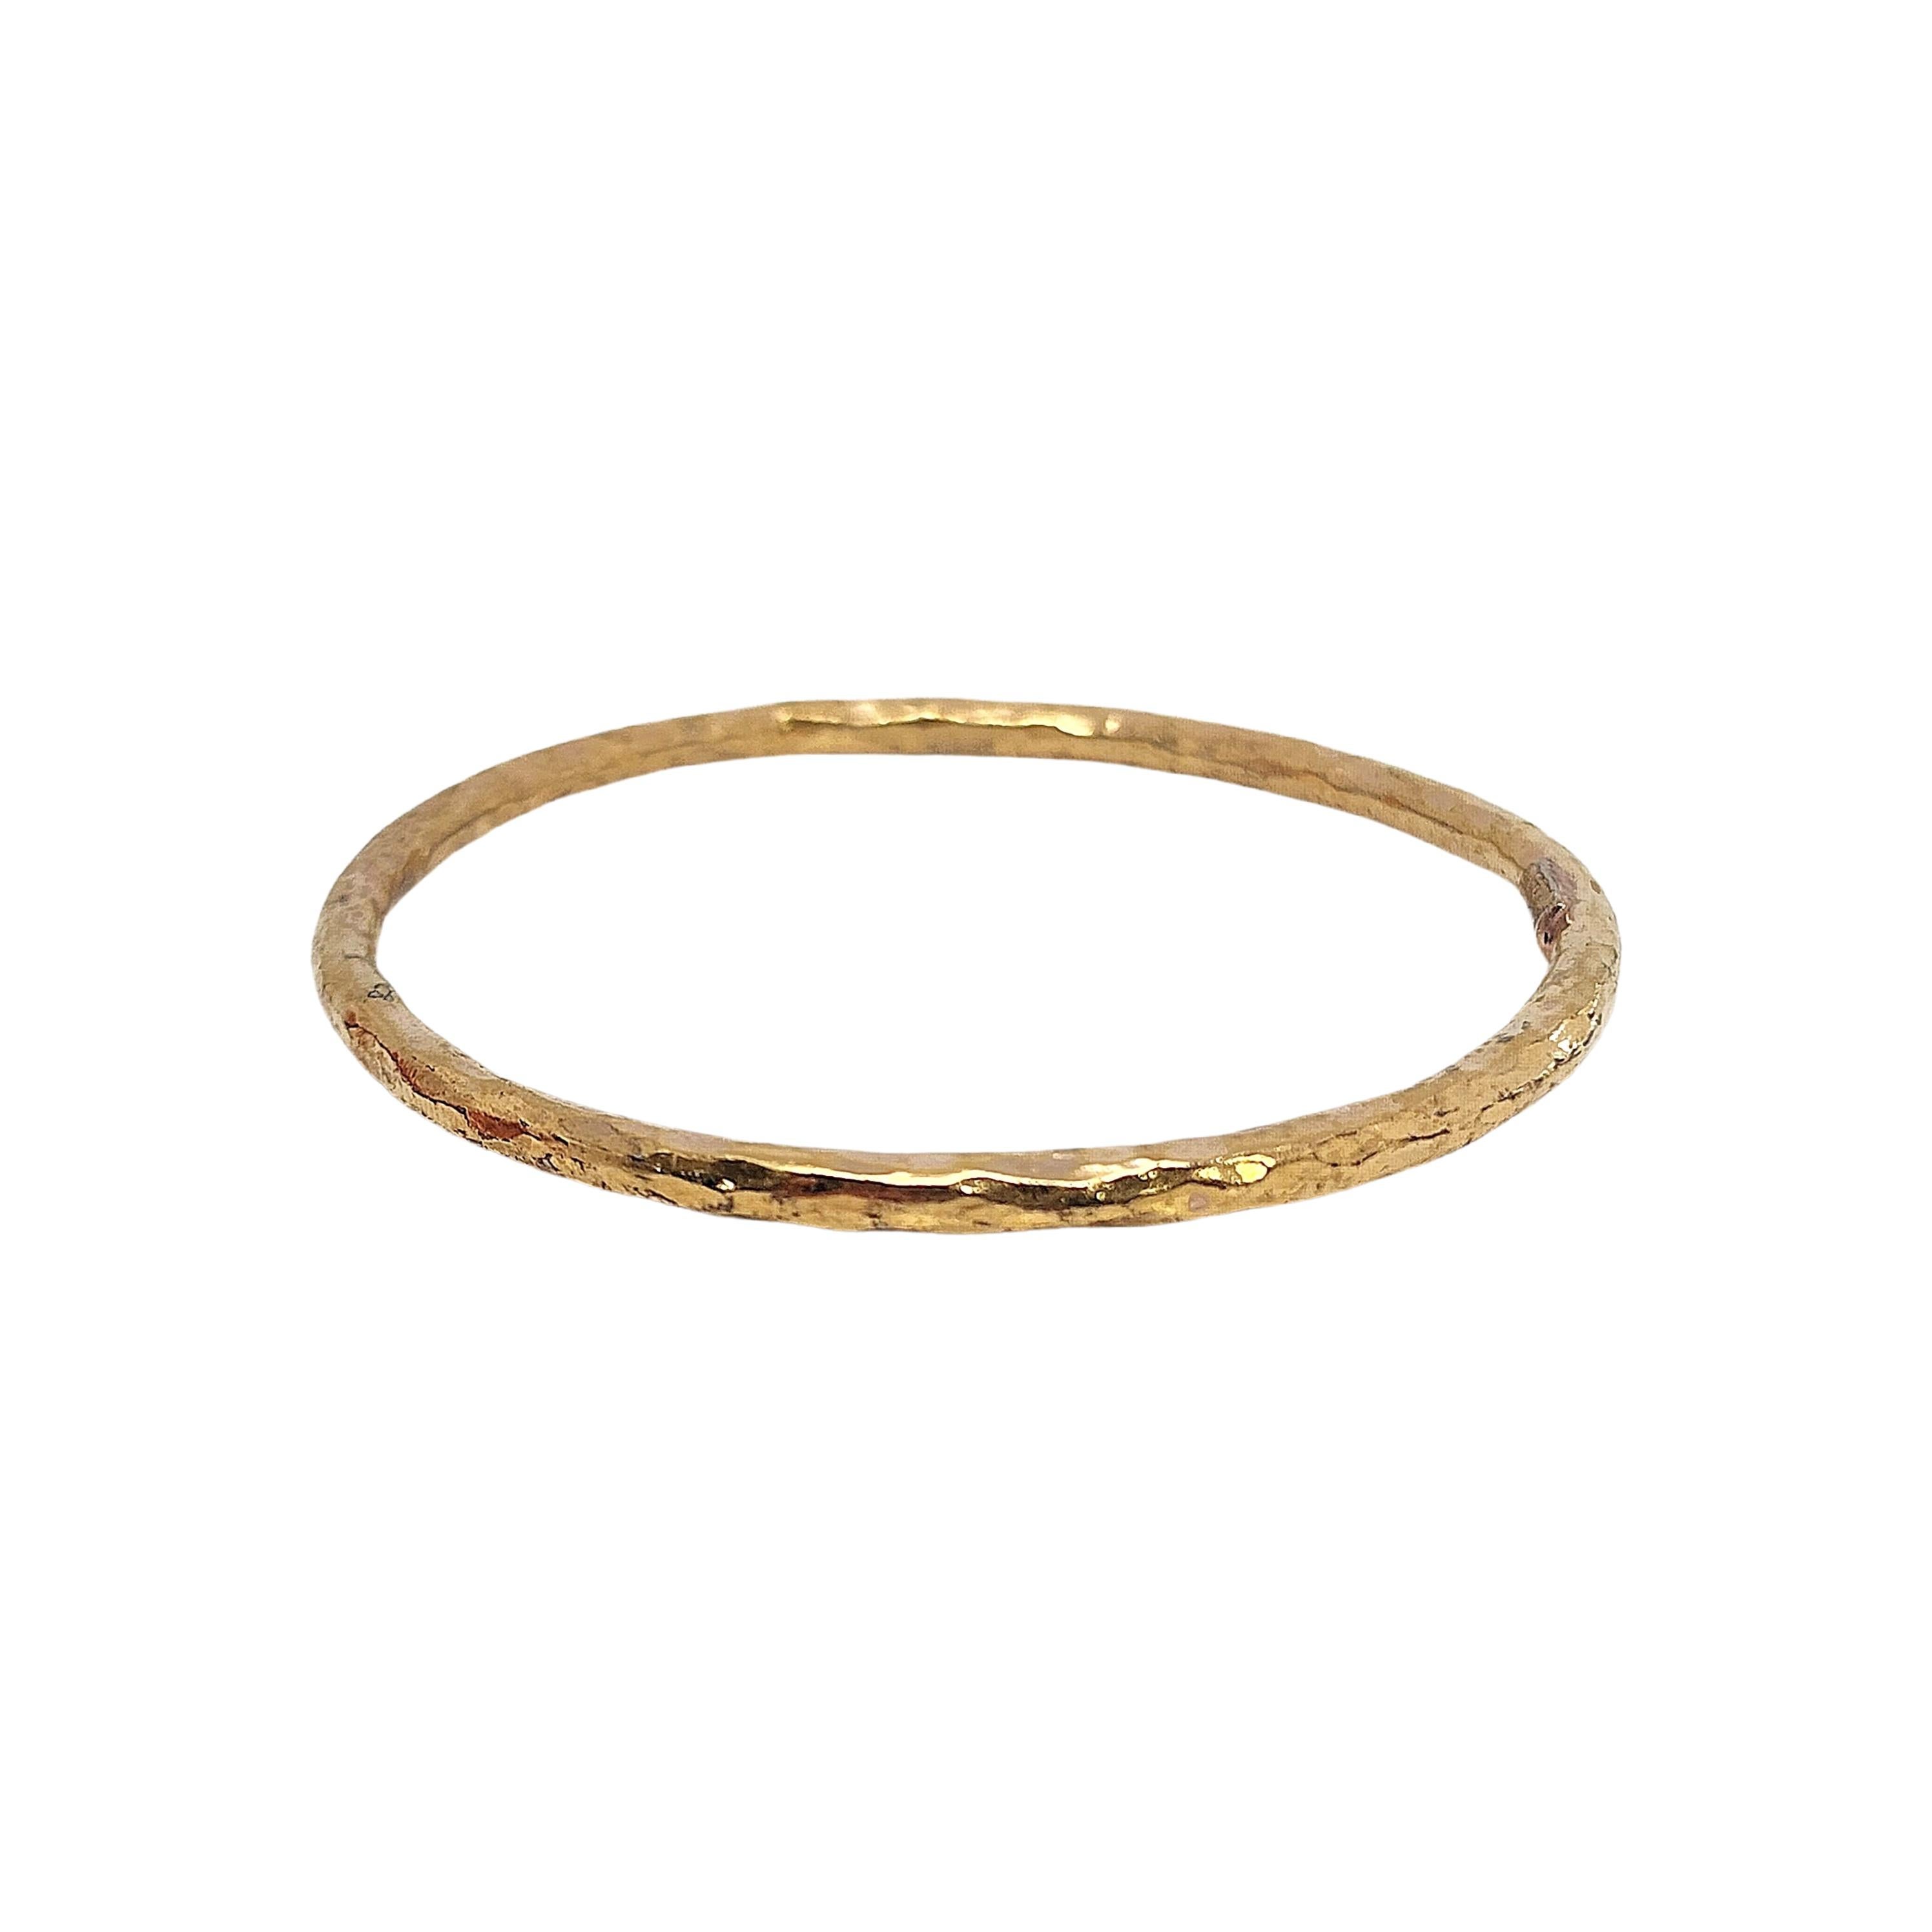 Hammered gold over sterling silver hammered bangle bracelet by Ippolita.

Ippolita's classic thin bangle bracelet is lightly hammered by hand. Gold tone over sterling silver.

Measures approx 7 3/4